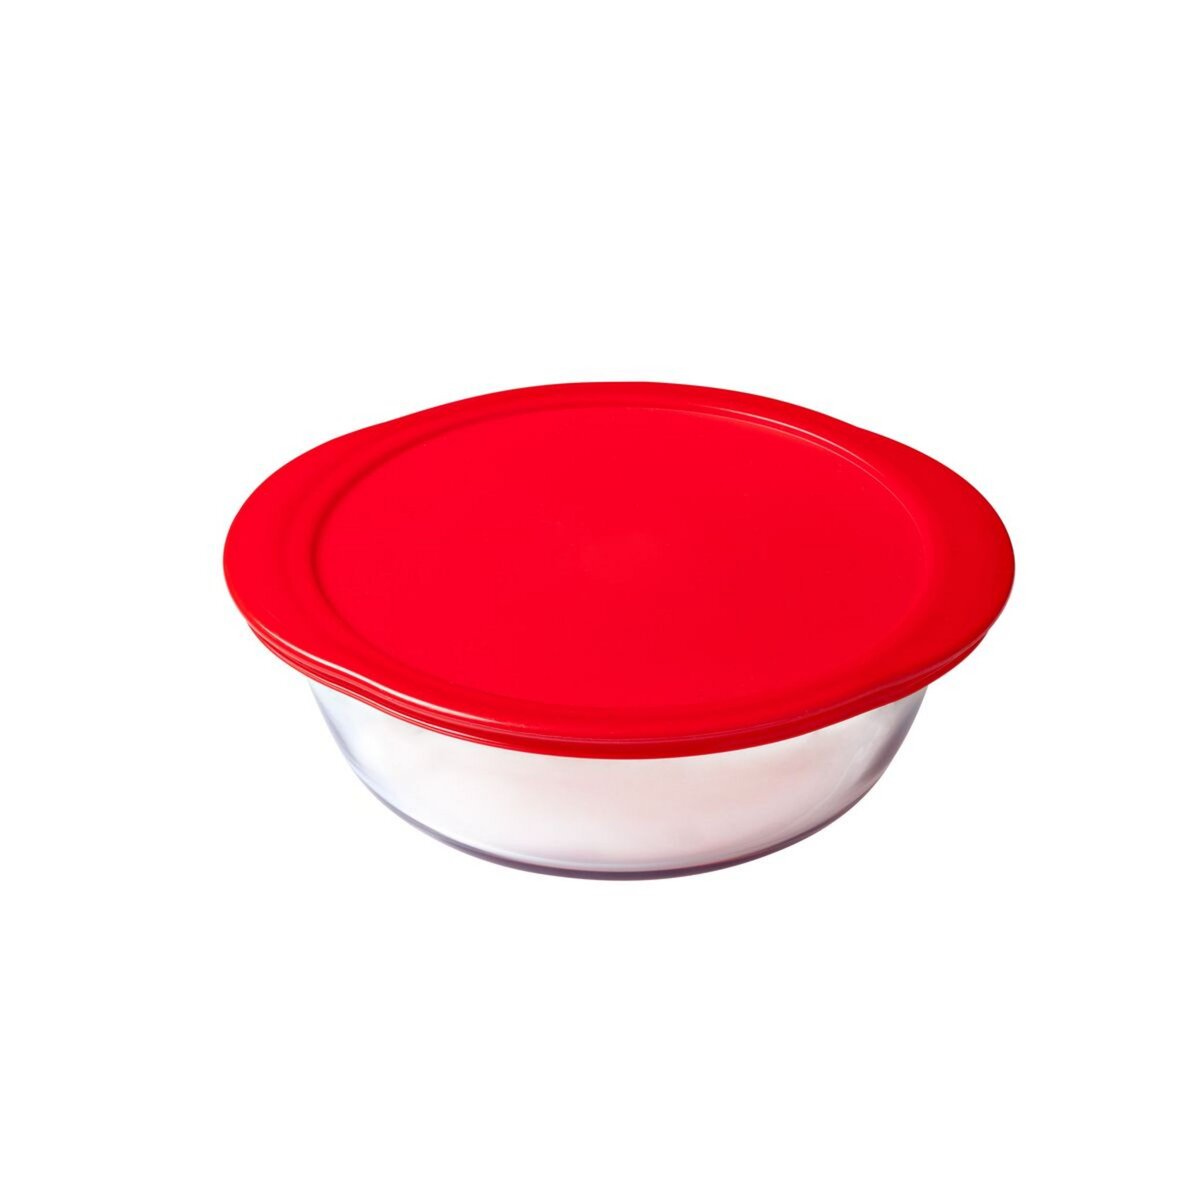 PYREX Boite ronde en verre COOK AND STORE rouge 1,1L 20X18 cm